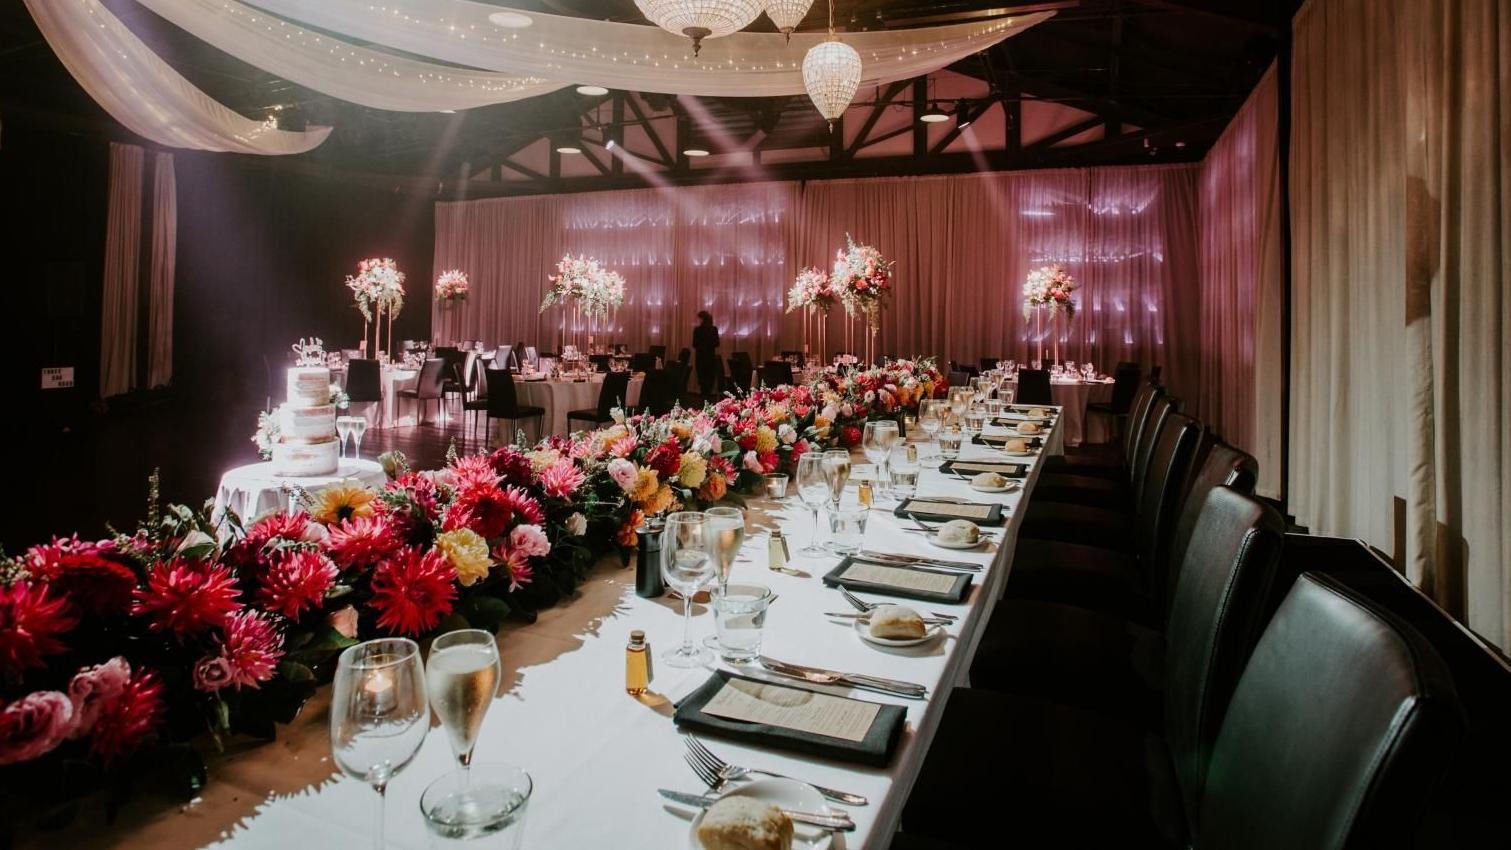 Find your Luxury Wedding Venue in Melbourne